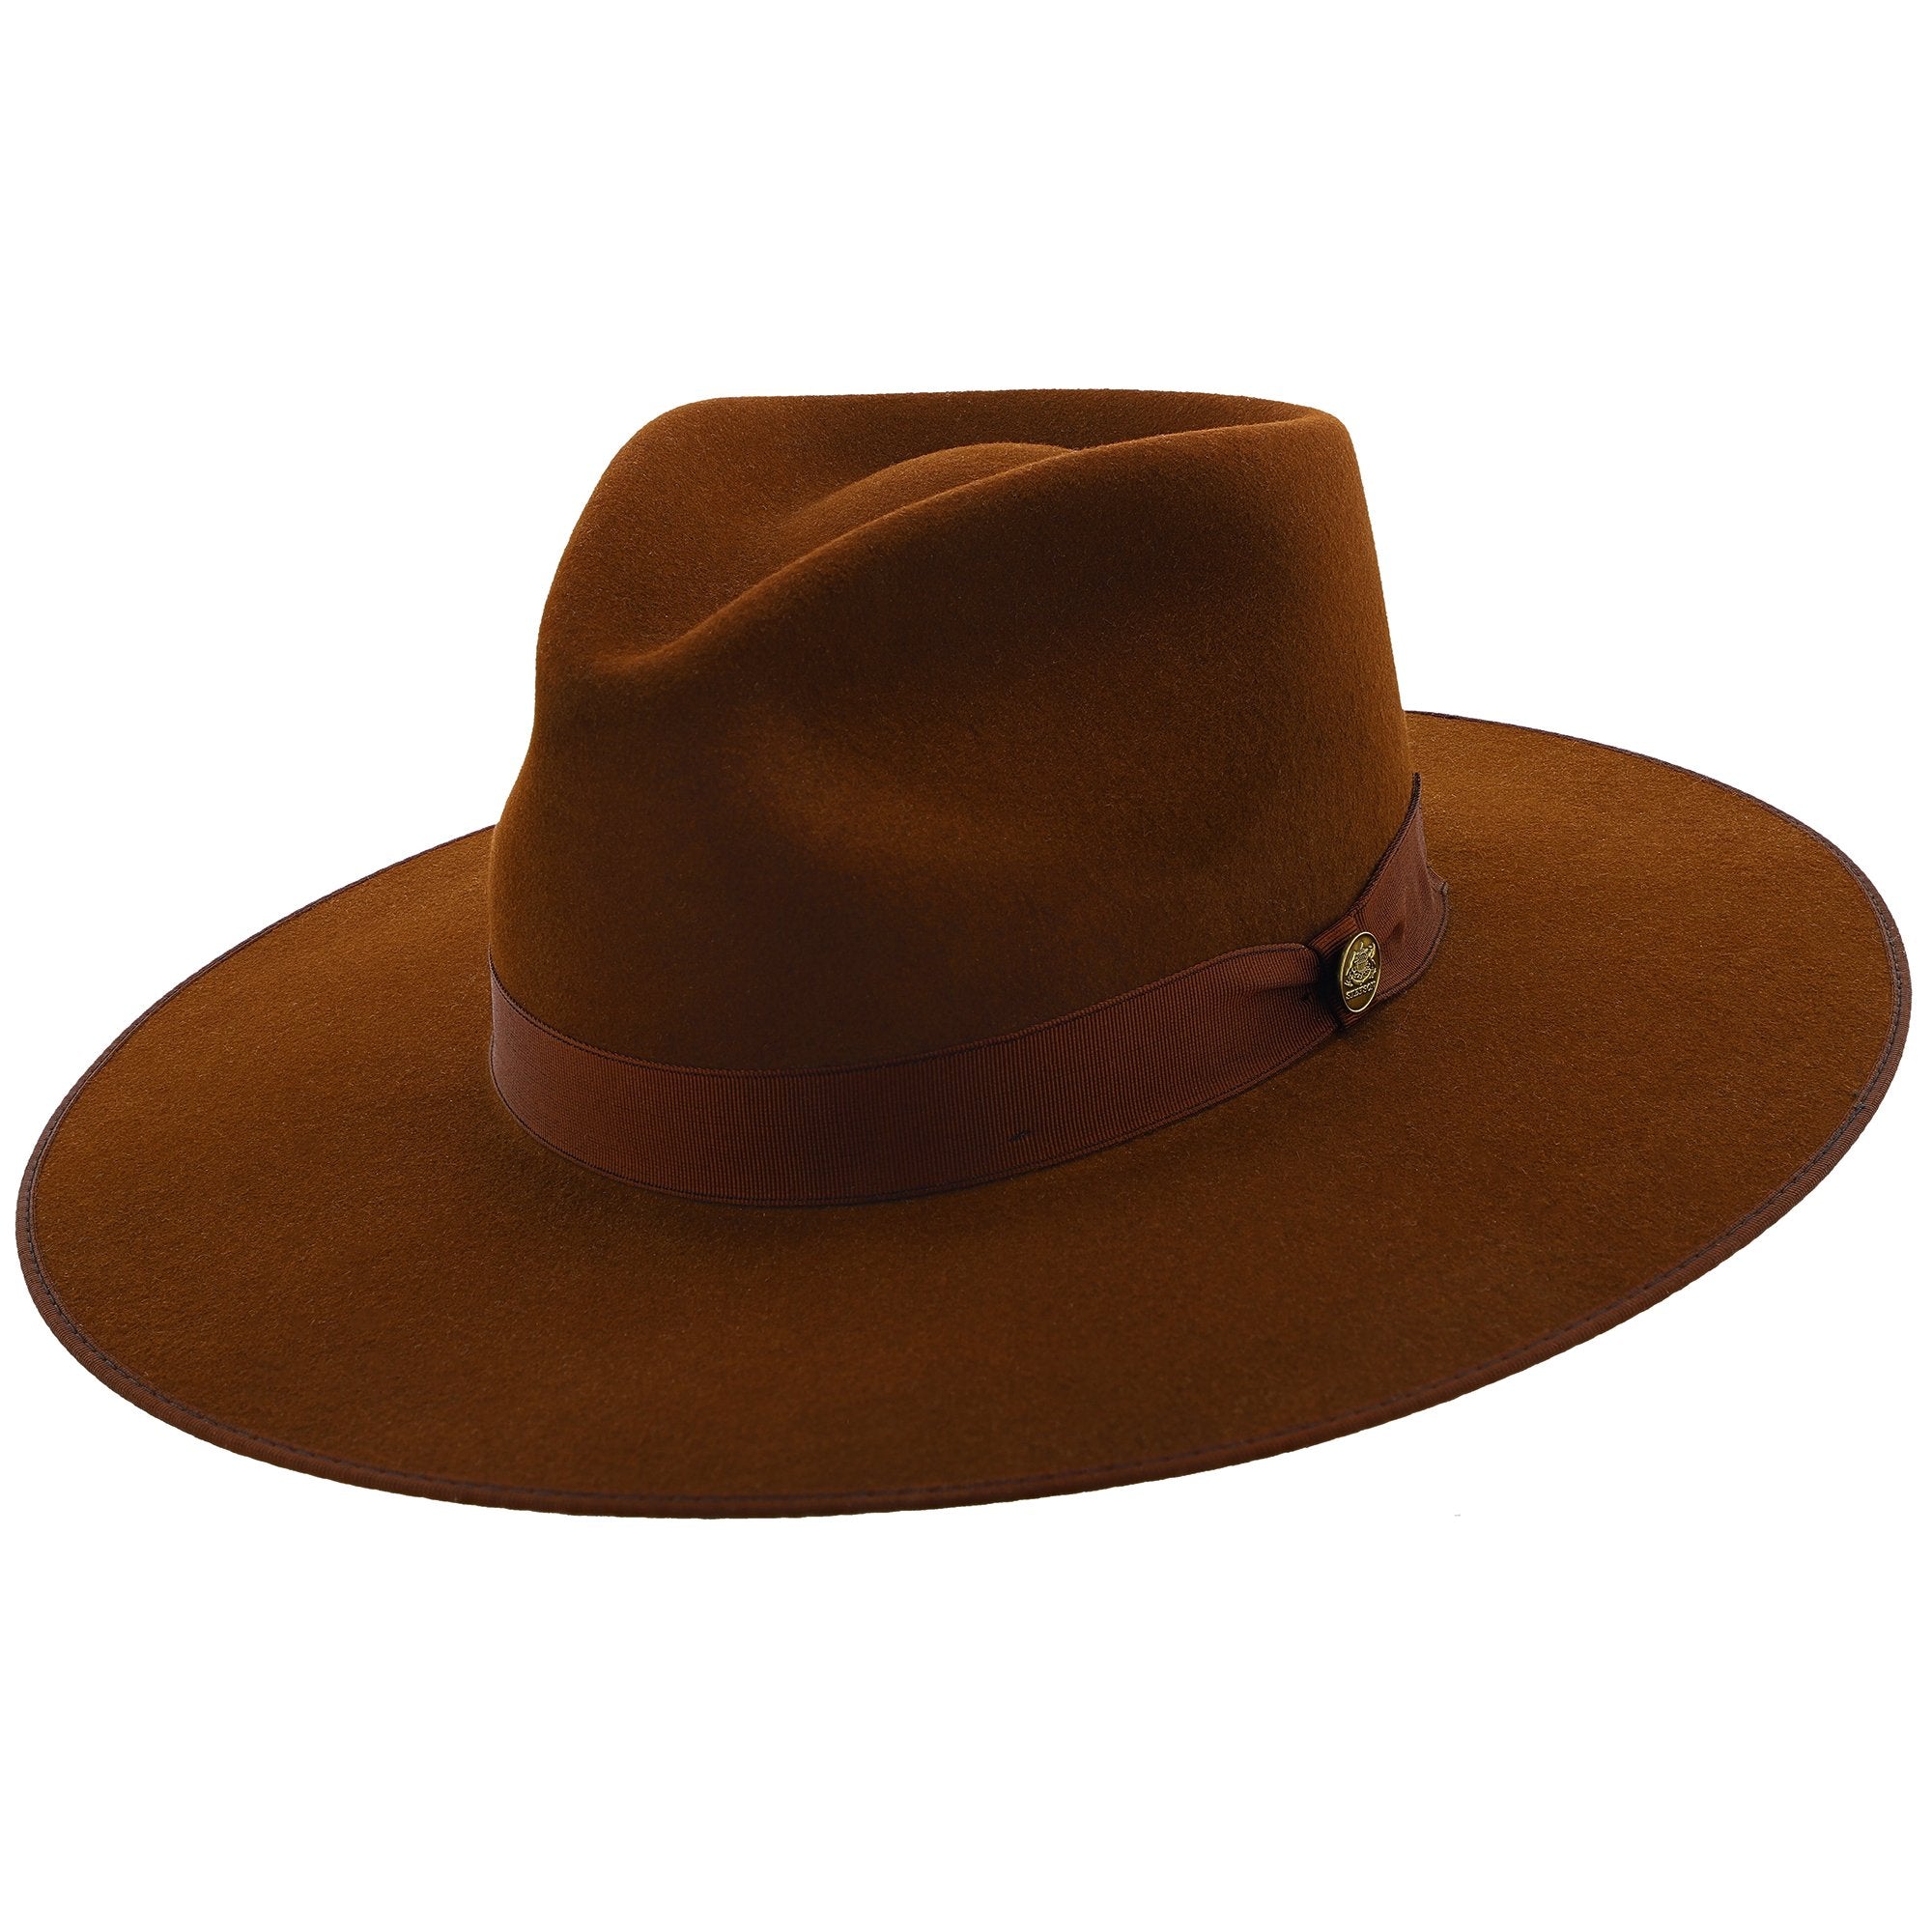 Midtown B - Stetson Wool Felt Fedora Hat